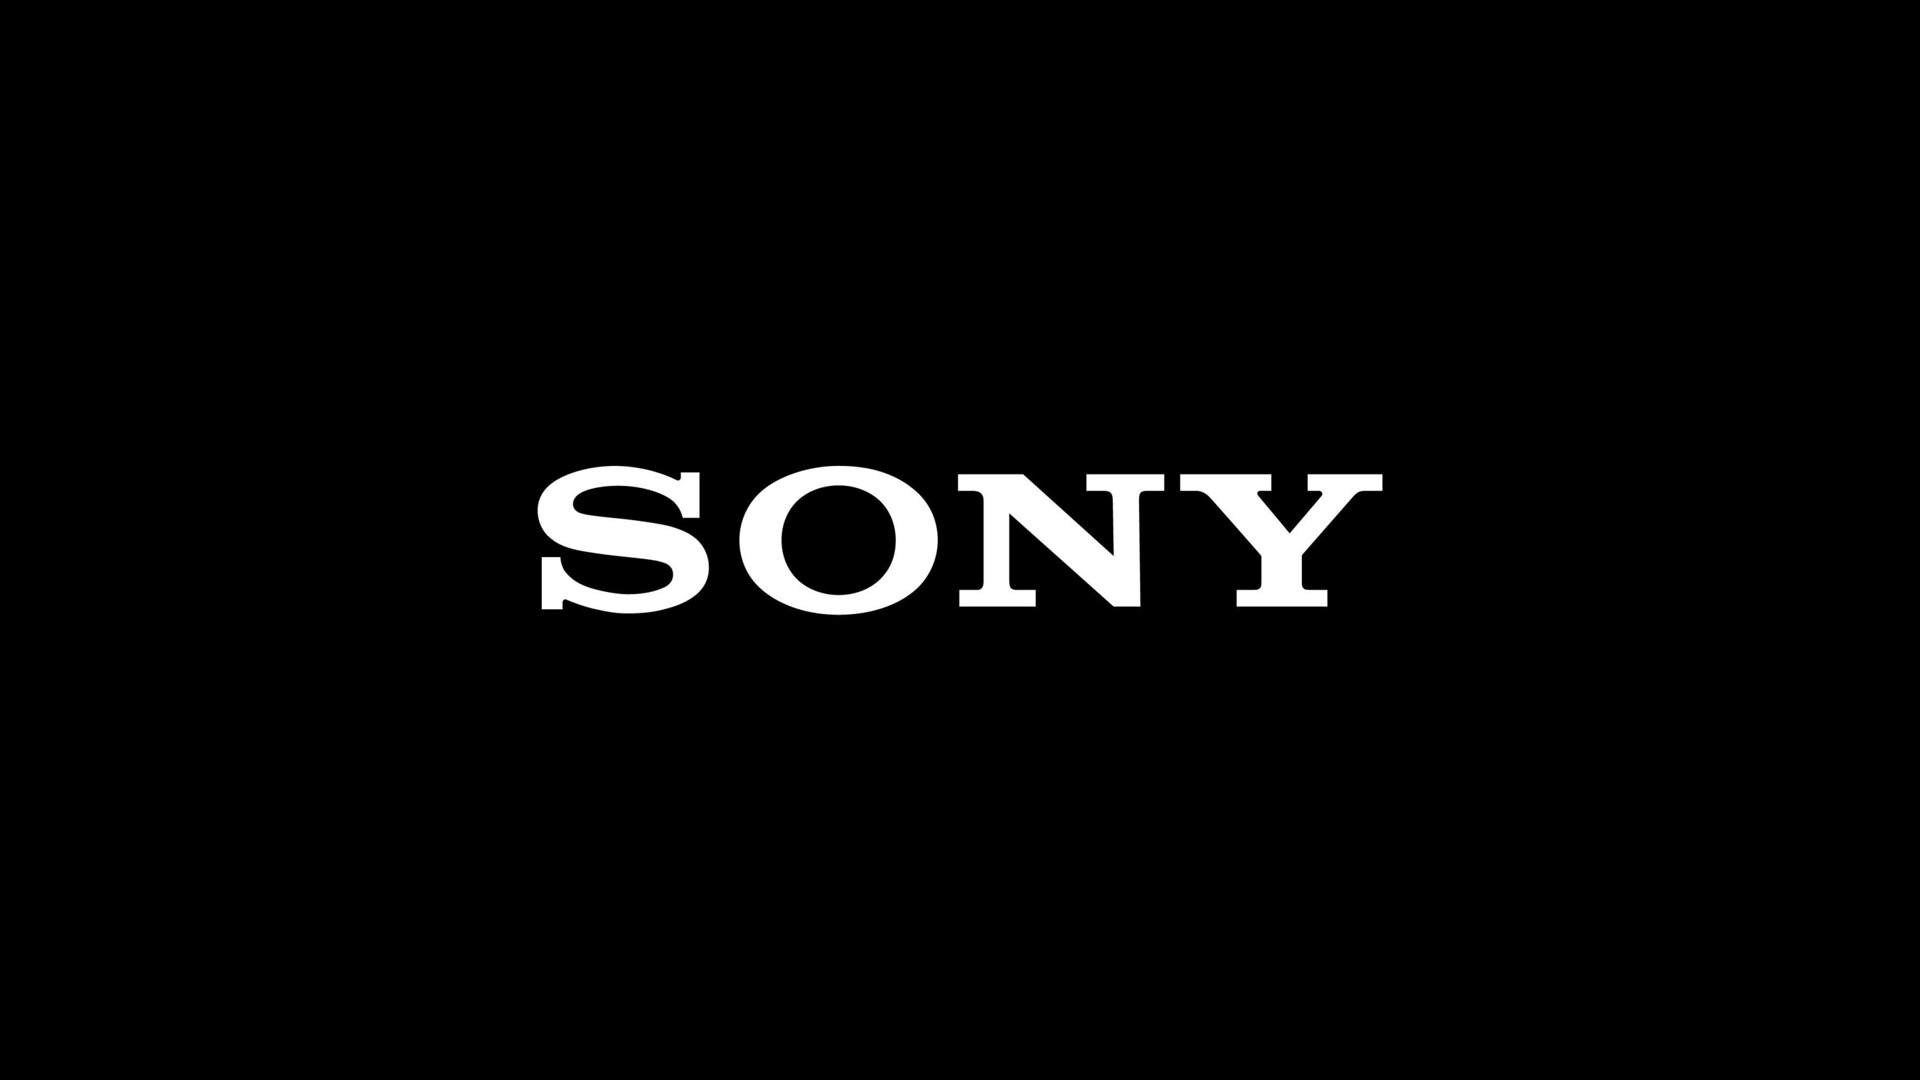 Sony_Logo